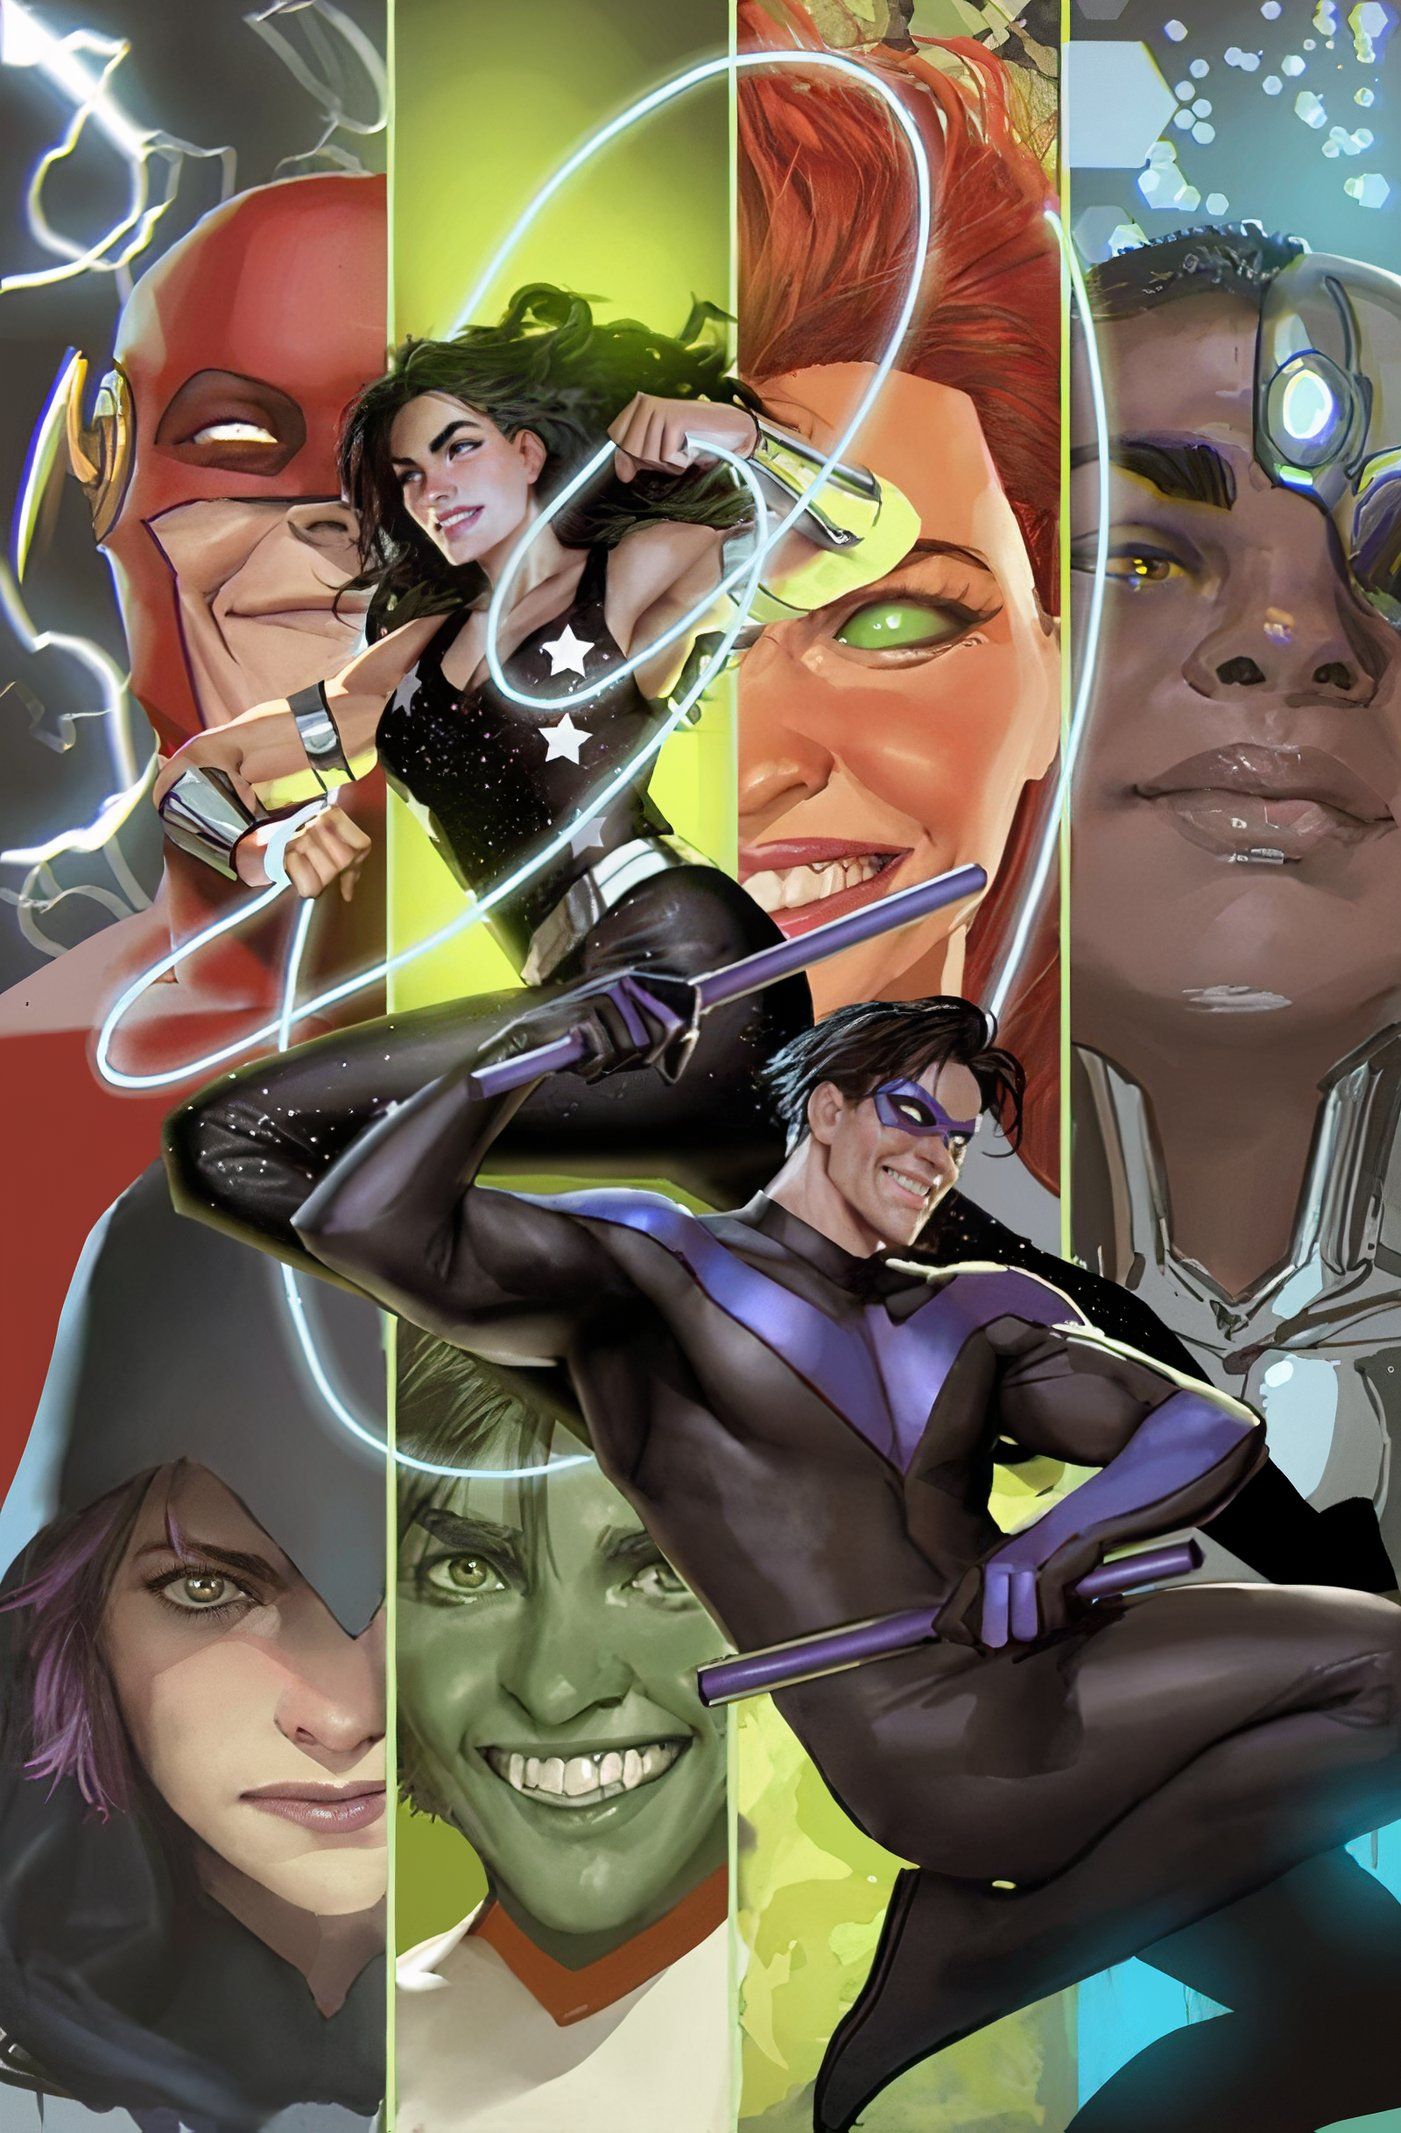 Titans #15 varaint cover featuring Donna Troy Nightwing Starfire Raven Beast Boy Flash Cyborg